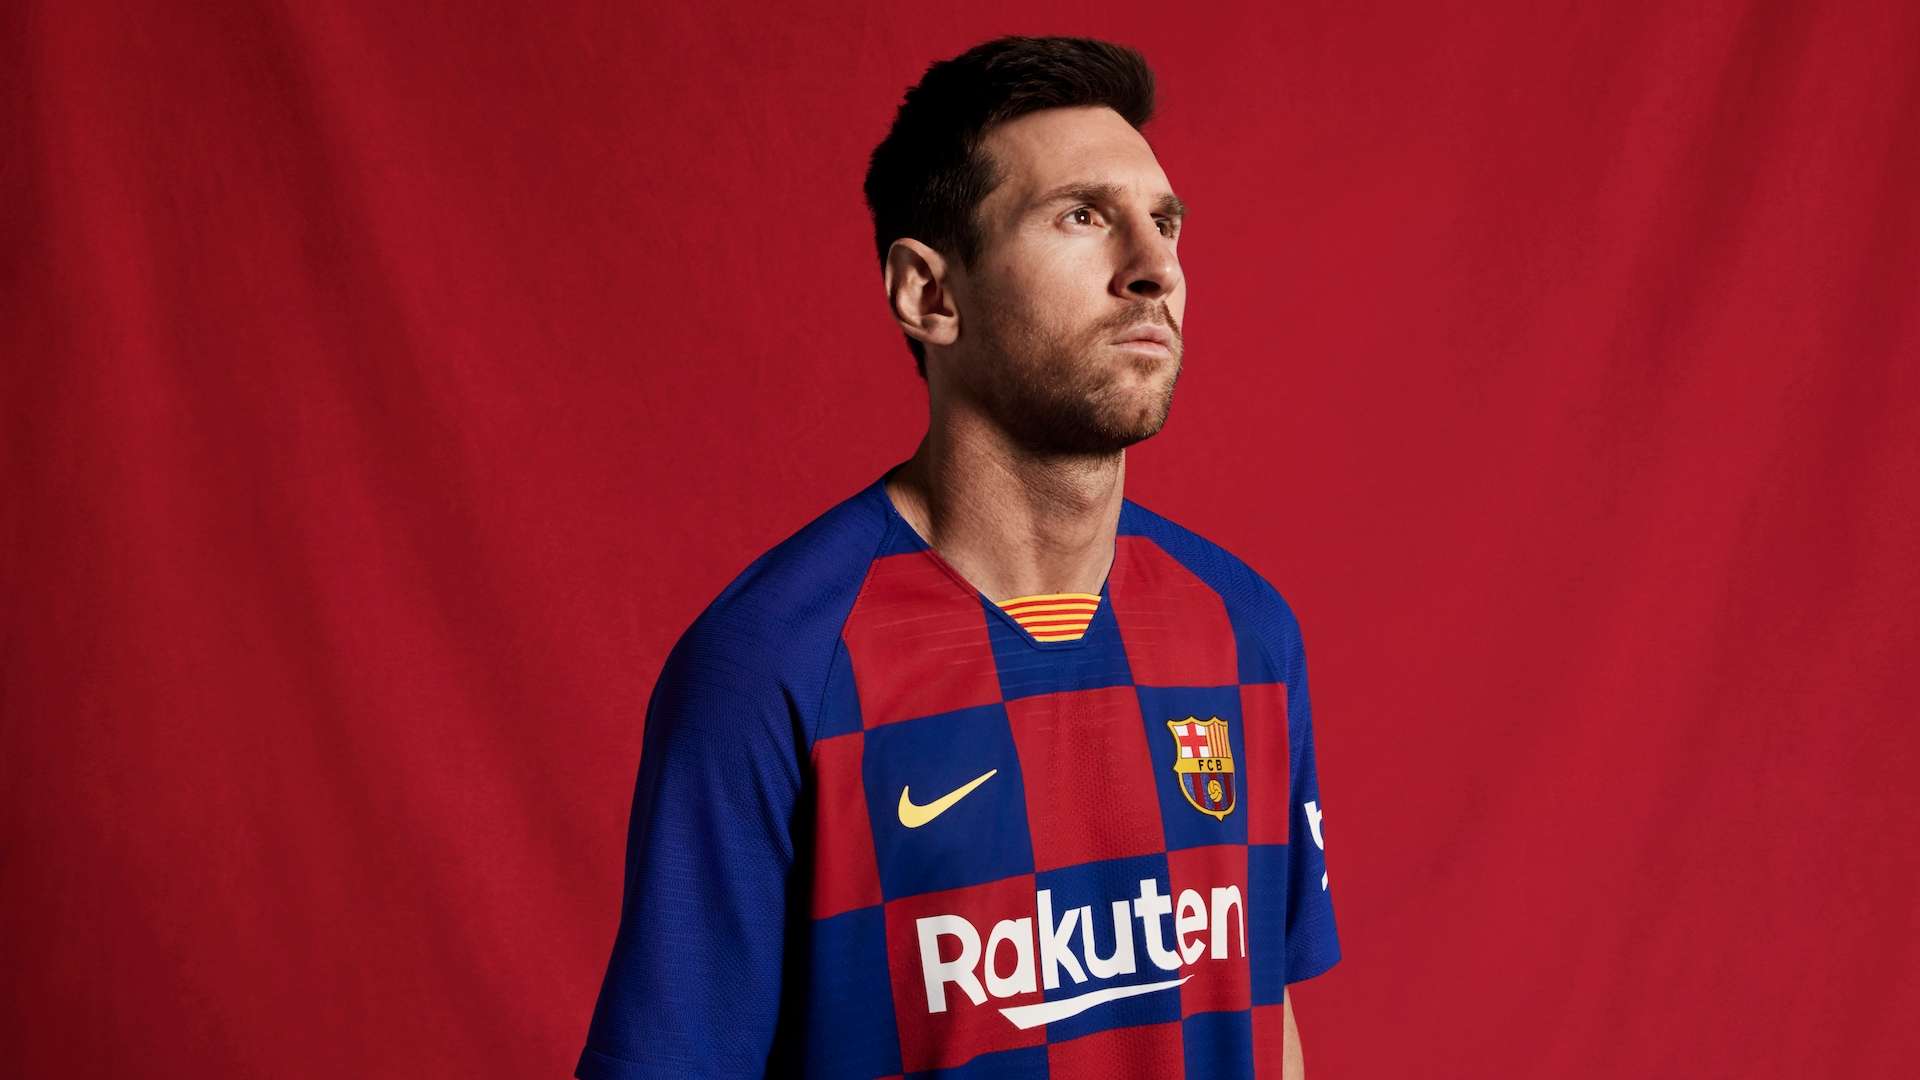 Nueva camiseta Barcelona 2019 2020